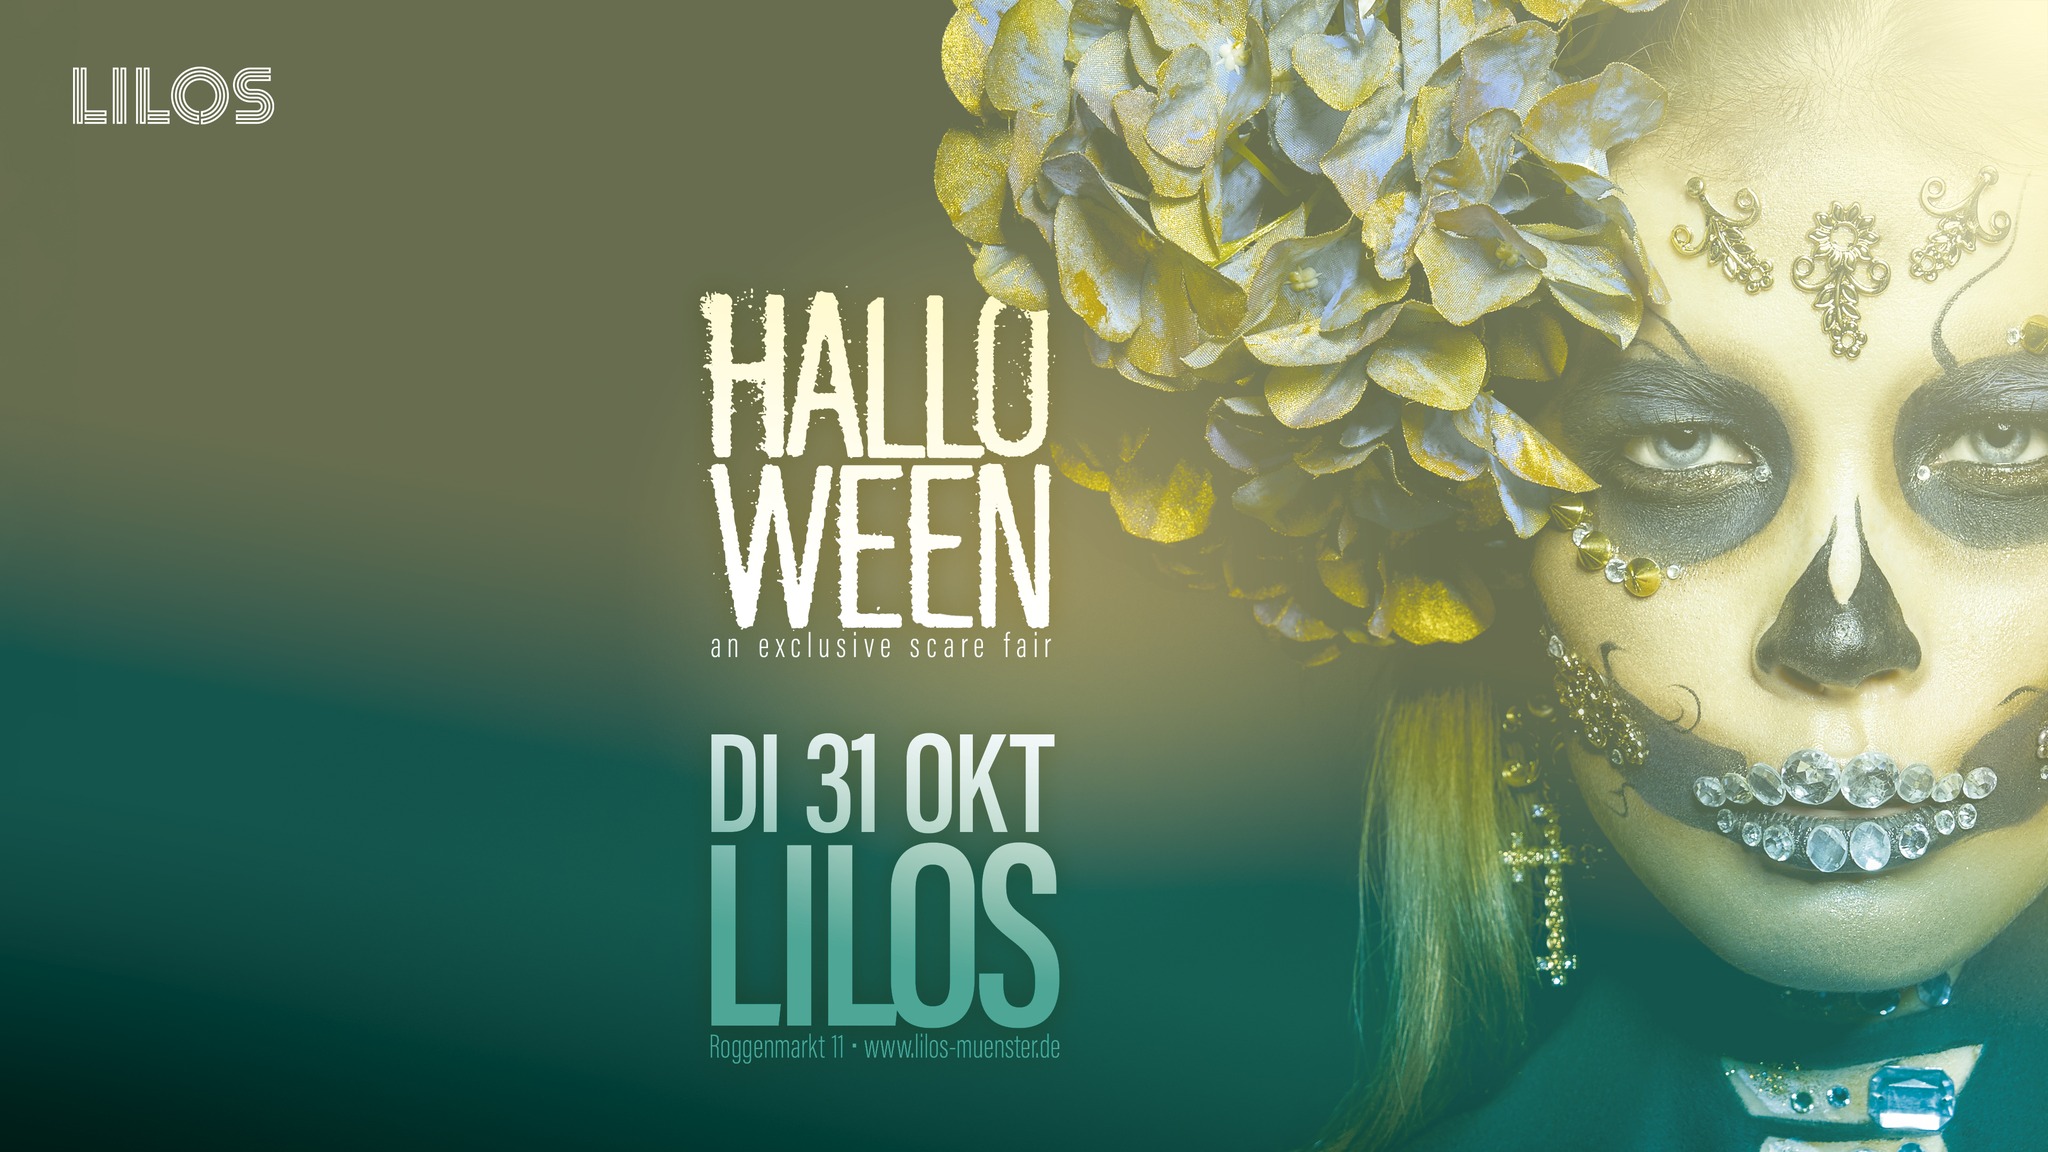 Die exclusive Halloween Party im Lilos • Di. 31.10